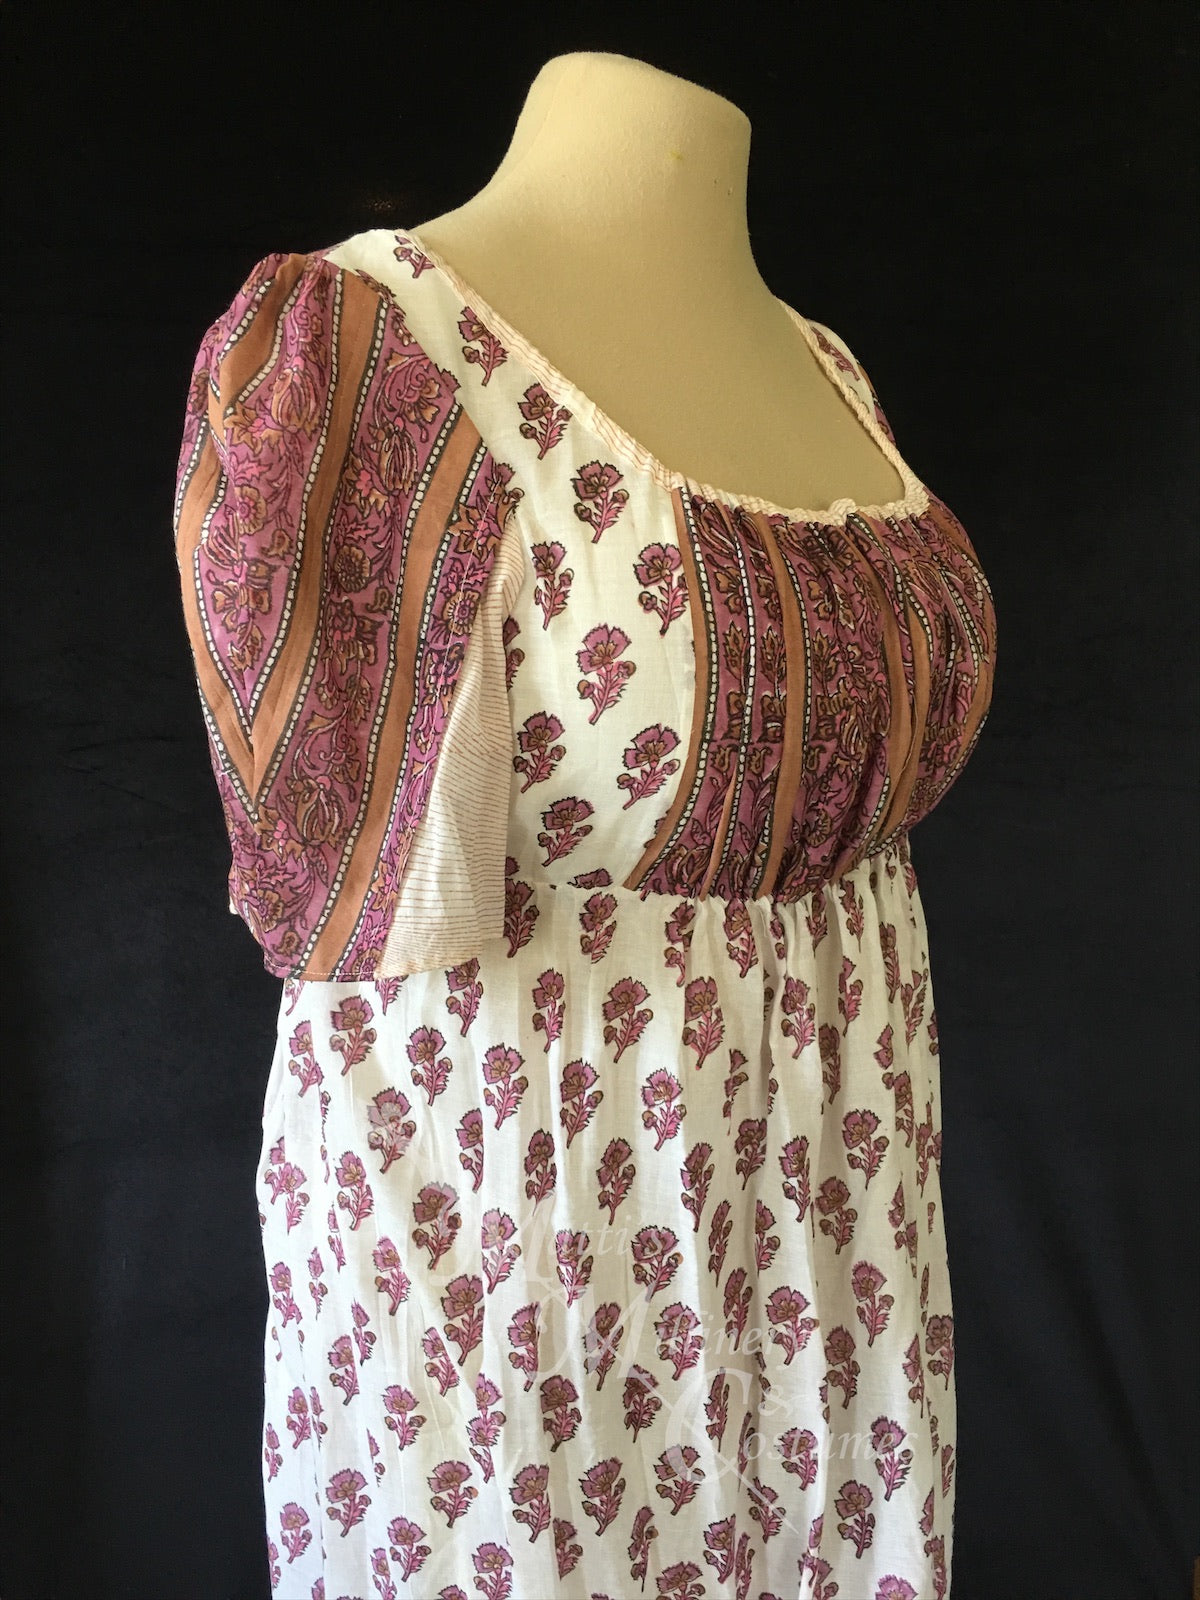 Cotton Sari Regency Day Dress in Mauve Pink